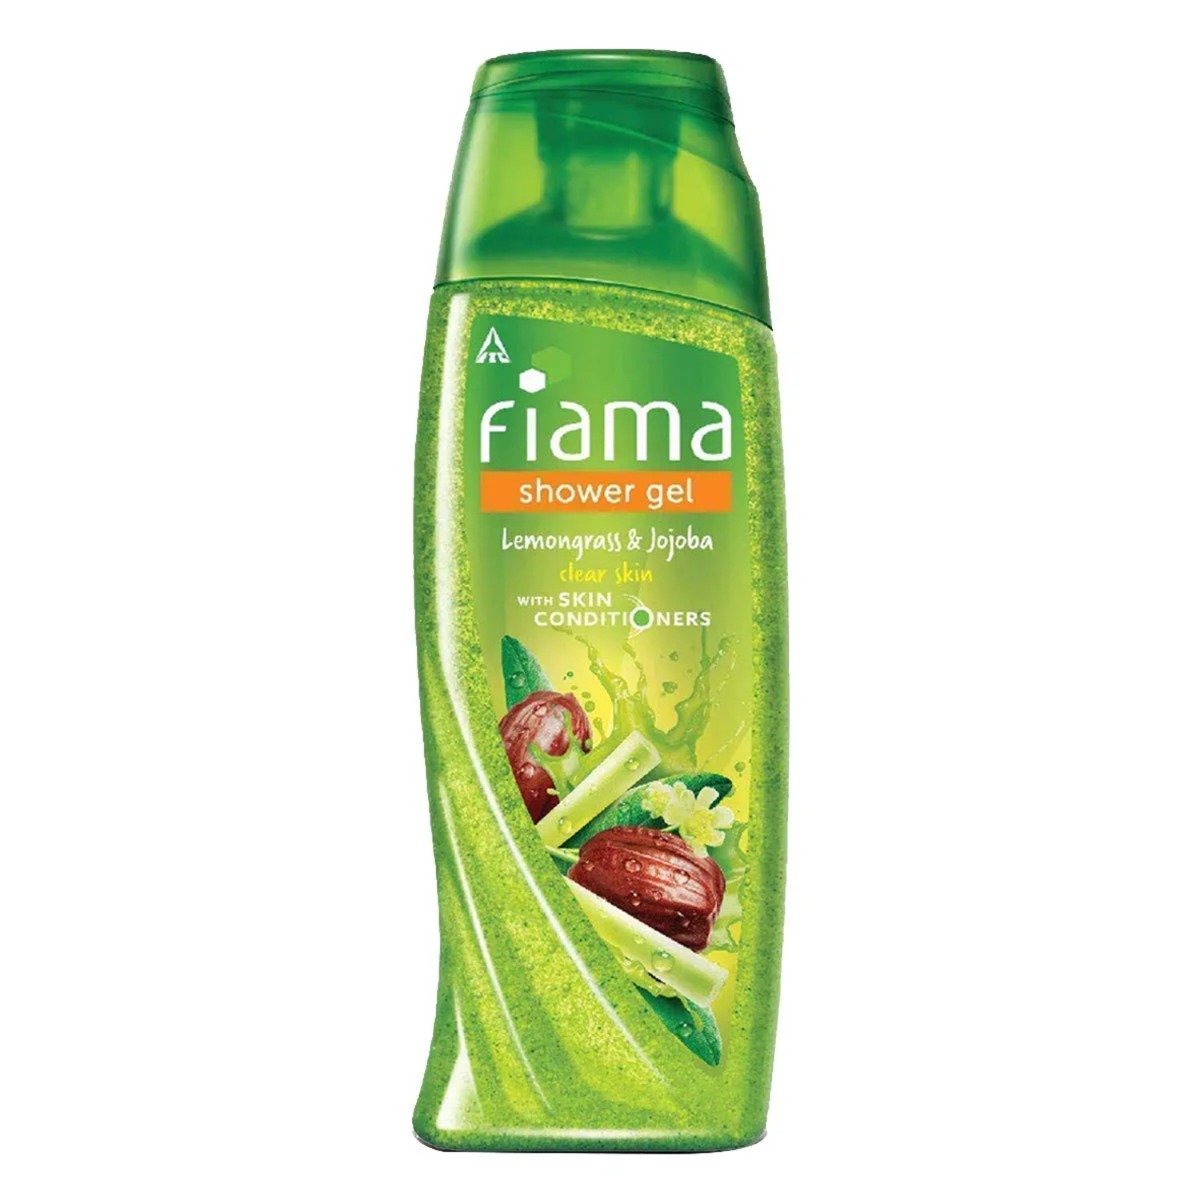 Fiama Shower Gel Lemongrass & Jojoba Body Wash With Skin Conditioners For Smooth Skin, 250ml